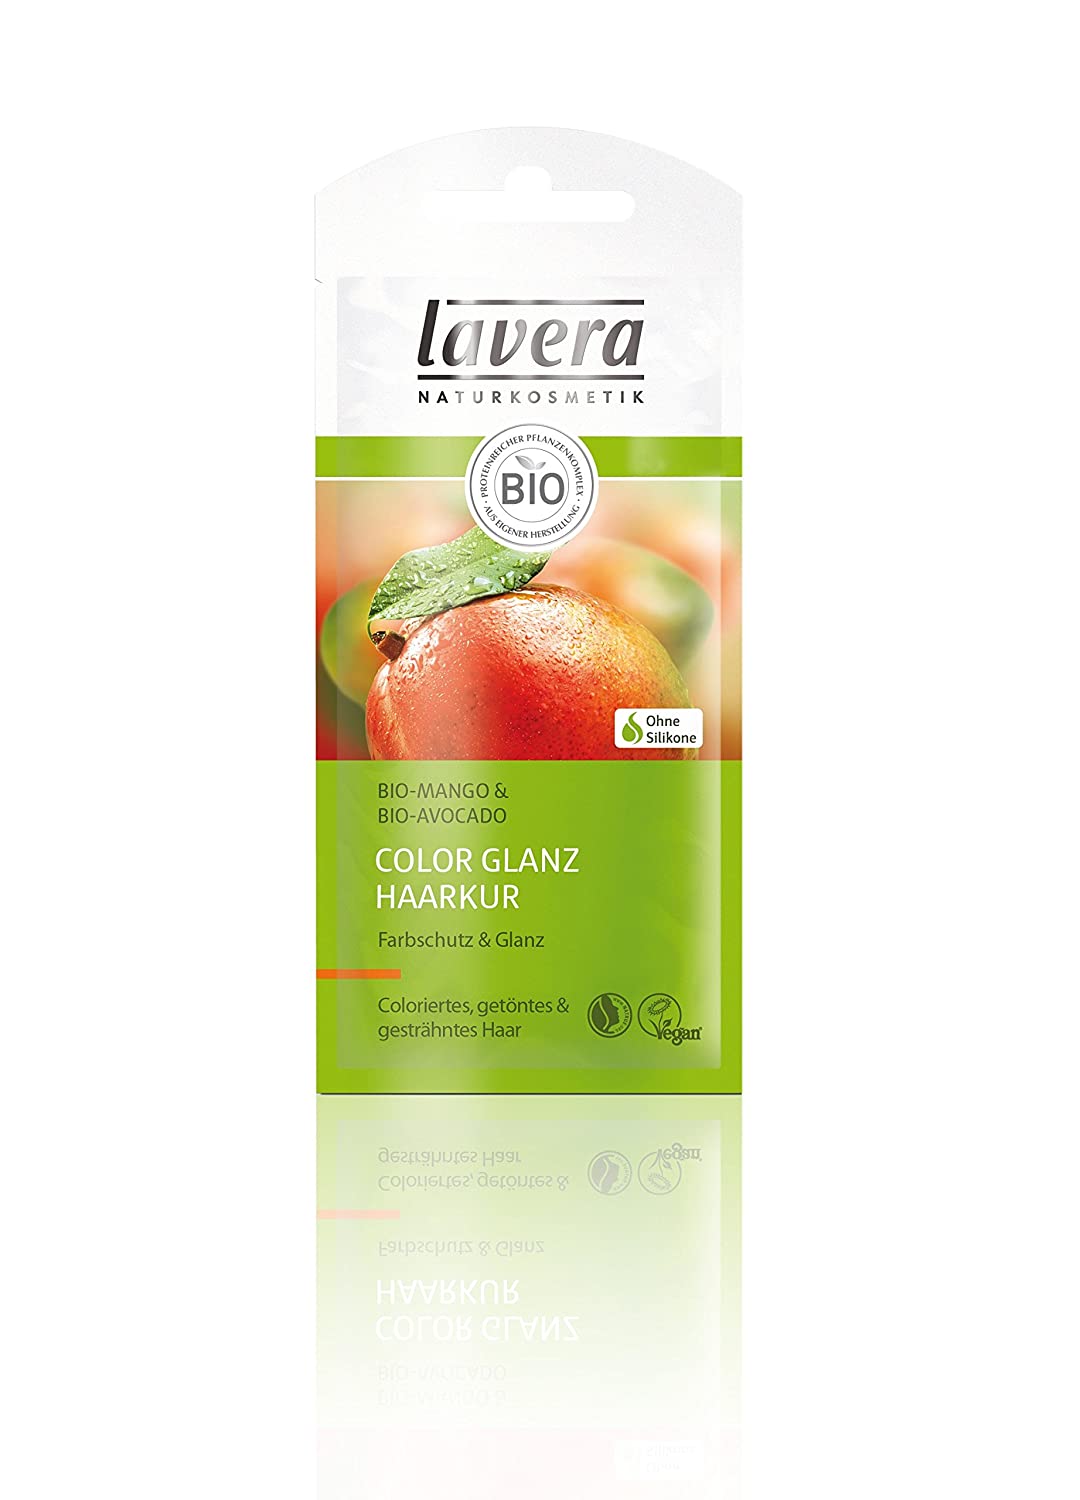 Lavera Mango Milk Hair Treatment for Coloured Hair & Colour Protection Sachet in Tray) 25 ml